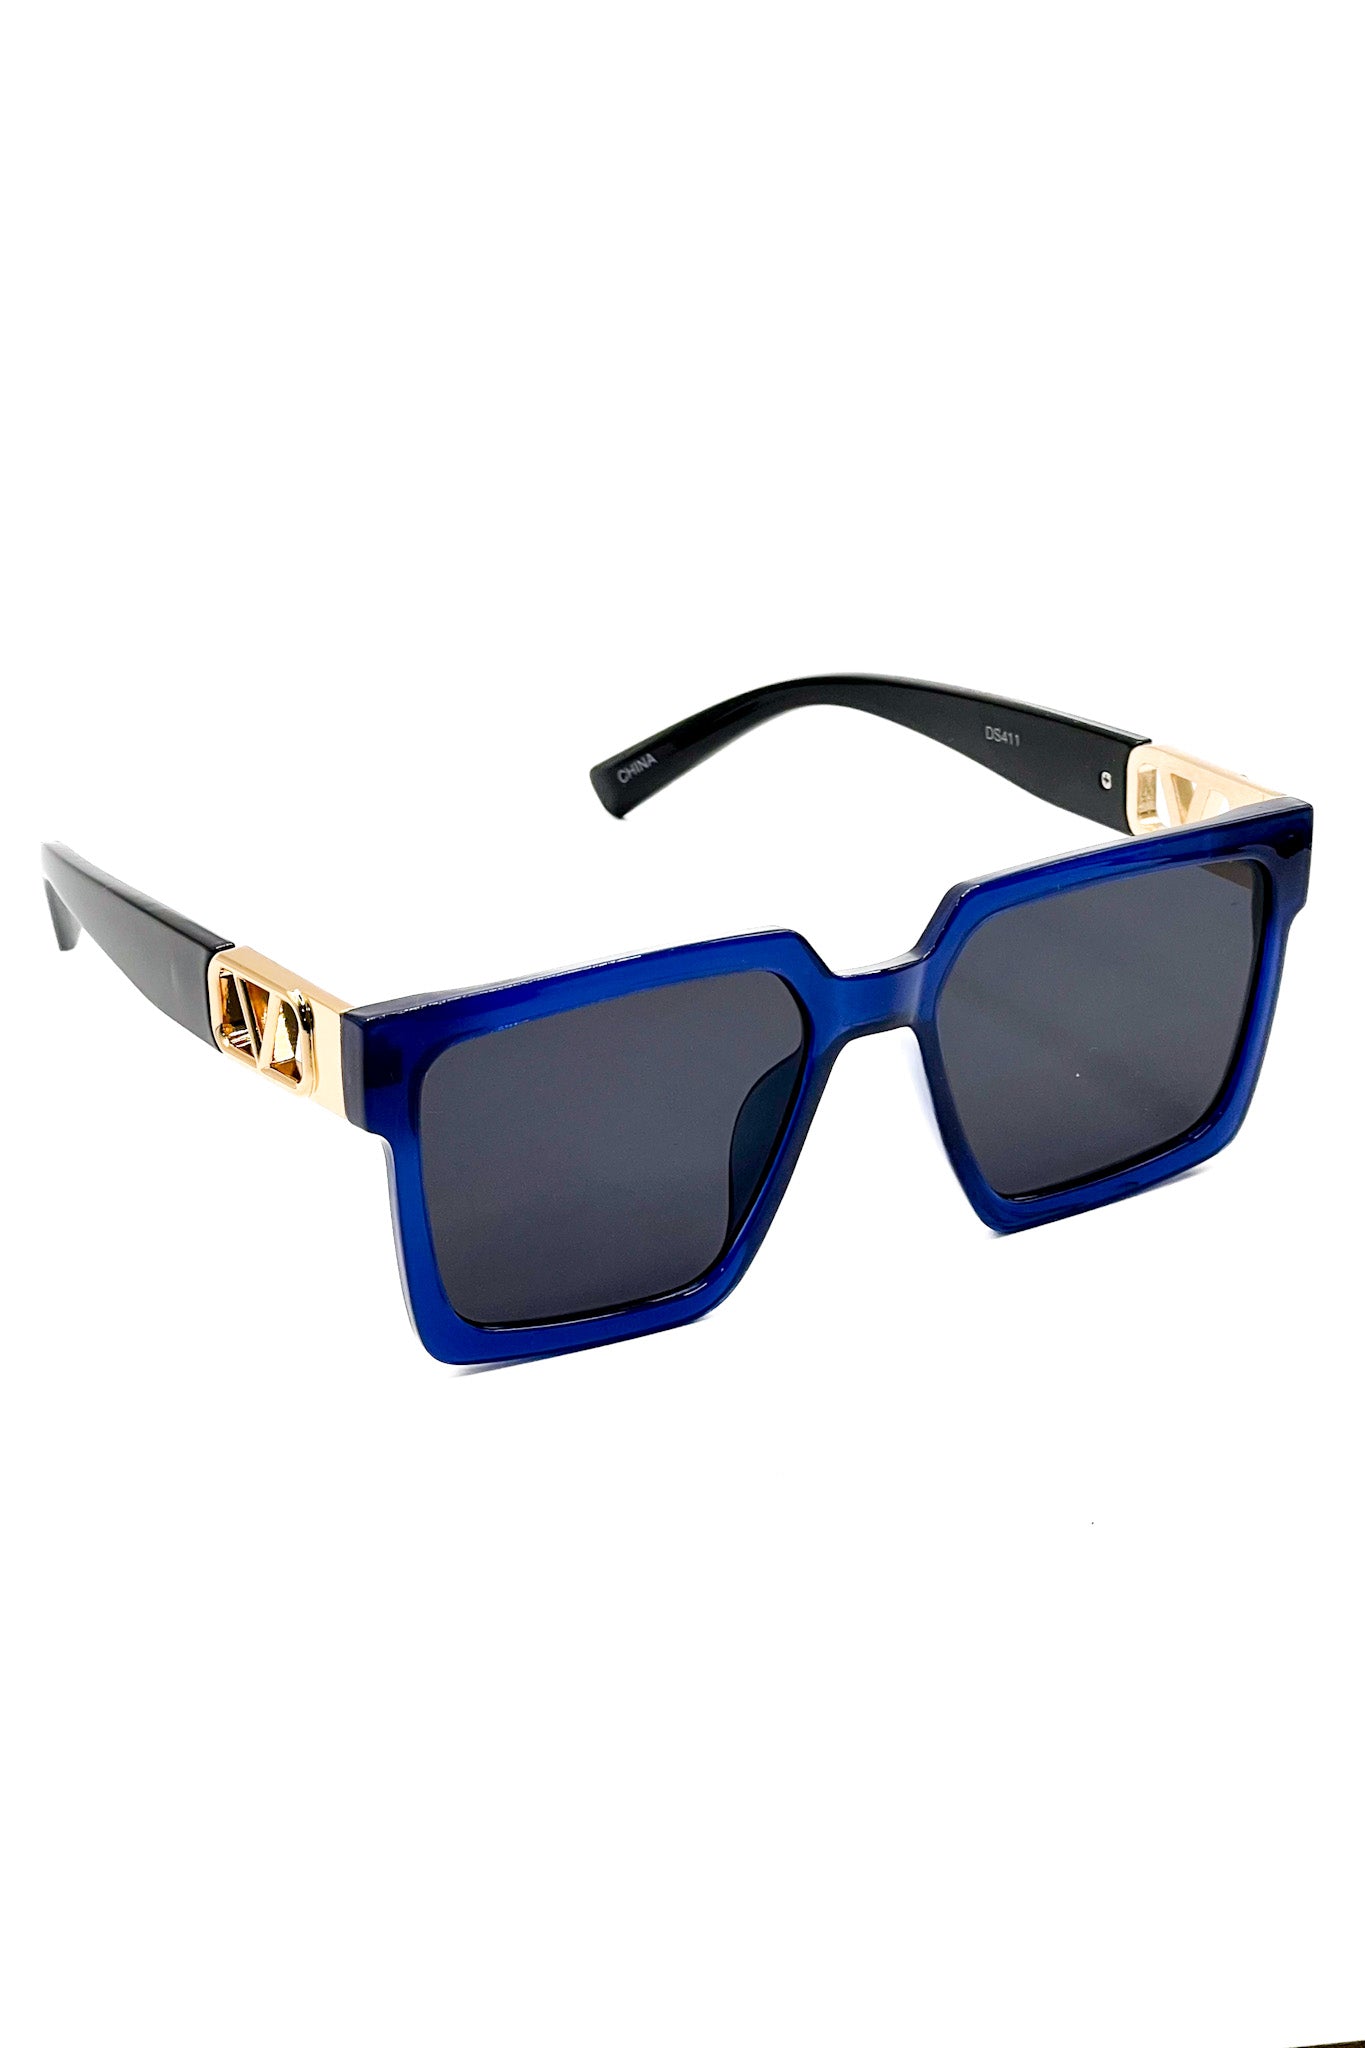 Viena Square Sunglasses